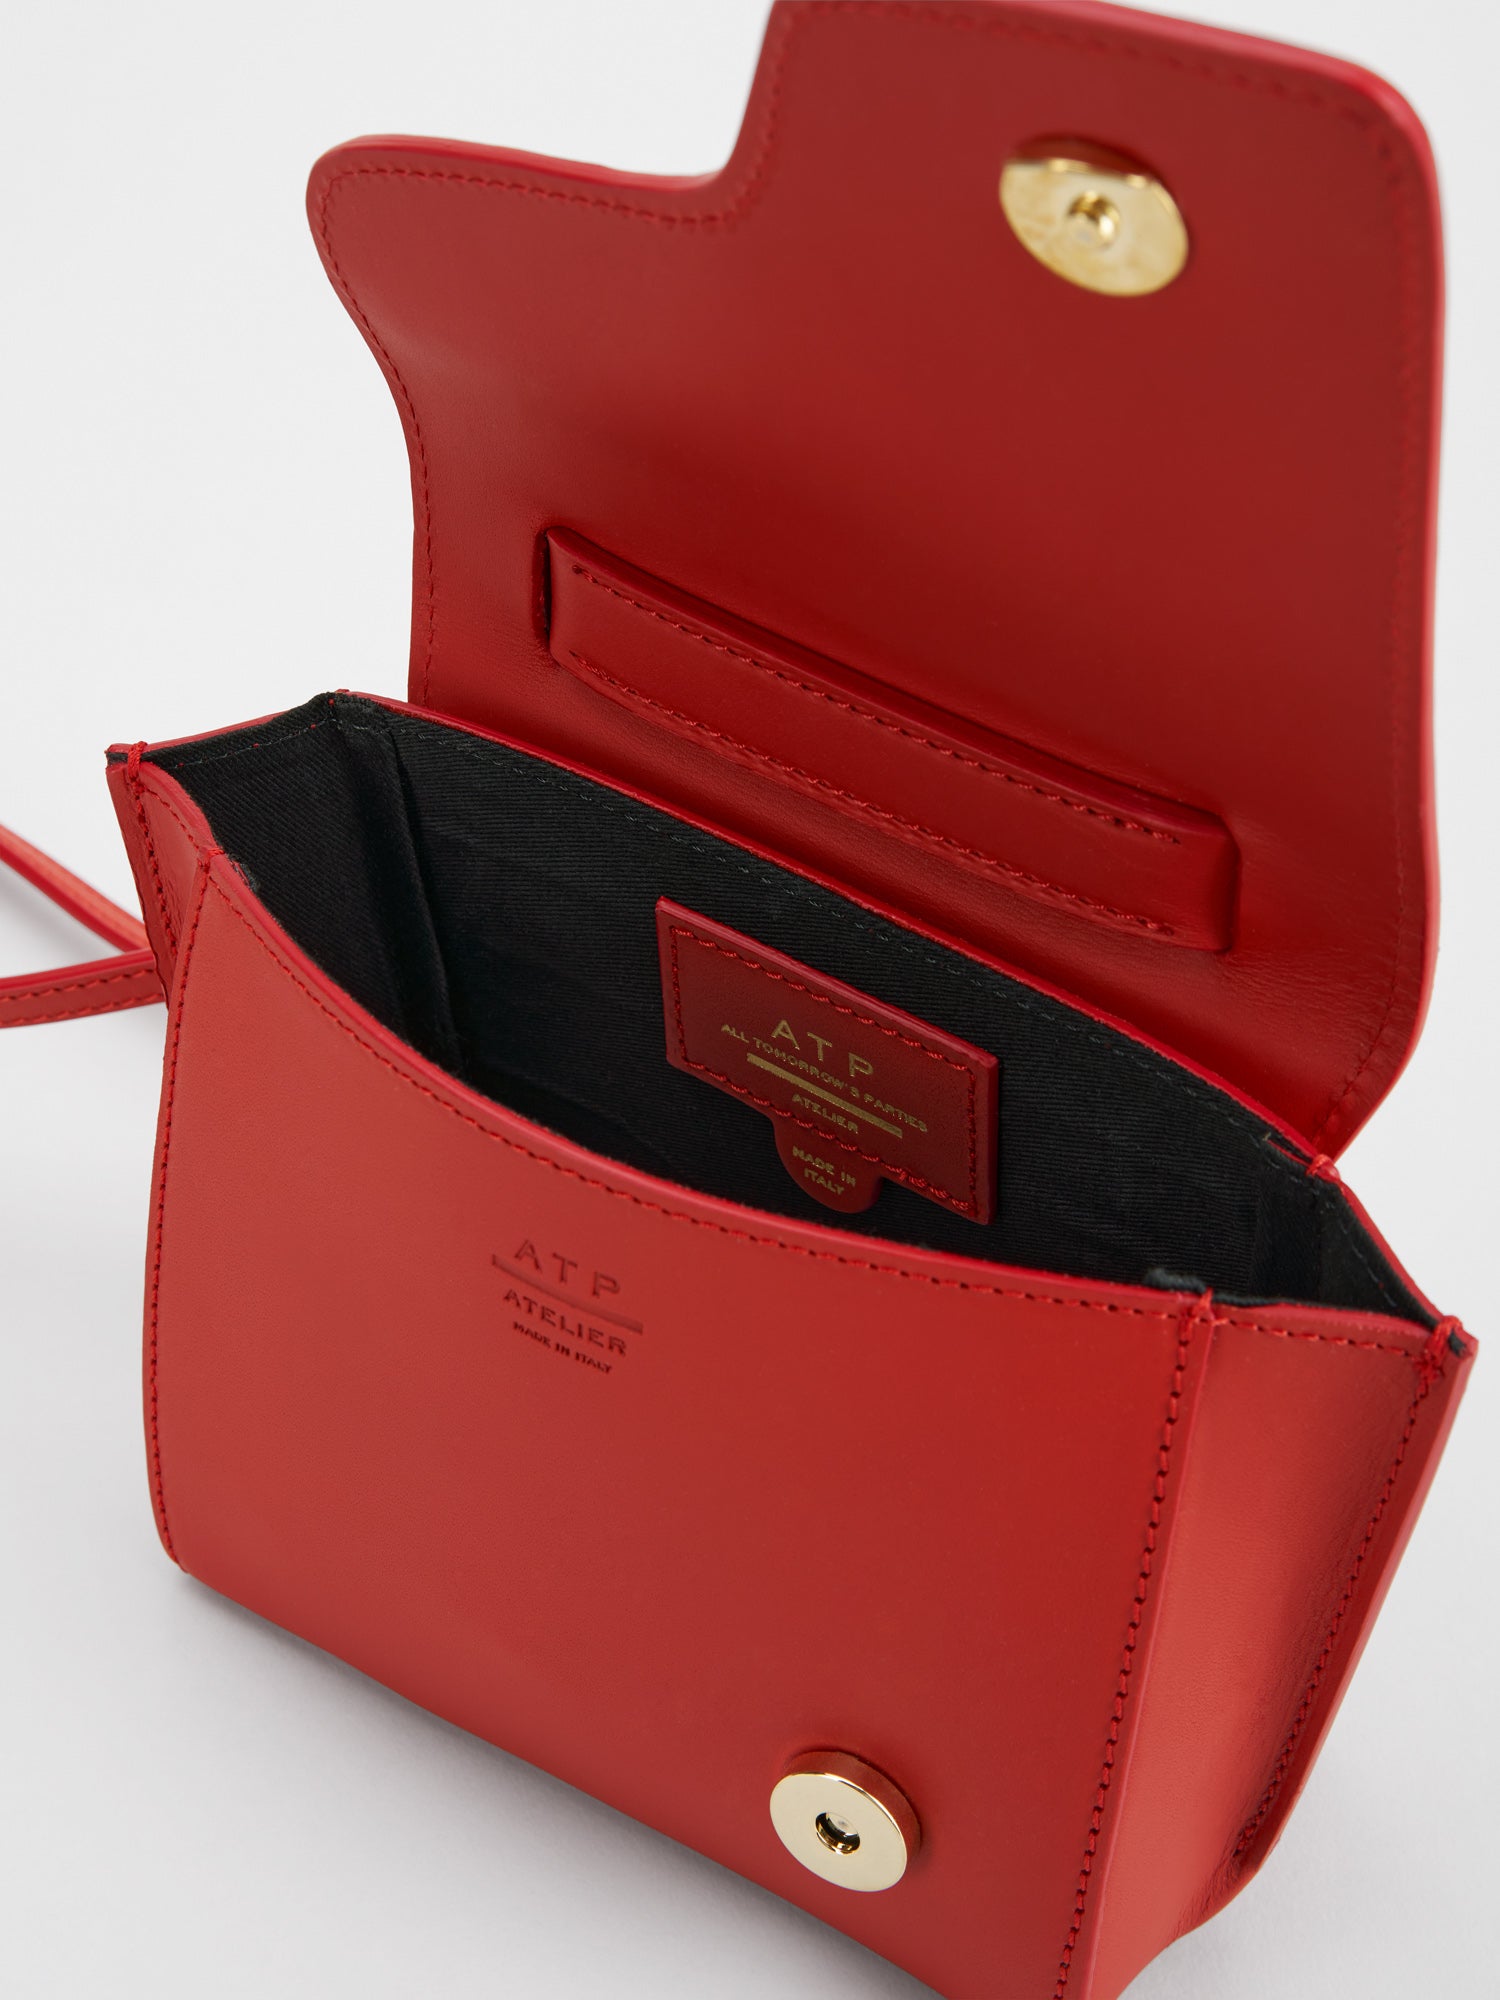 Montalcino Chili Leather Mini handbag